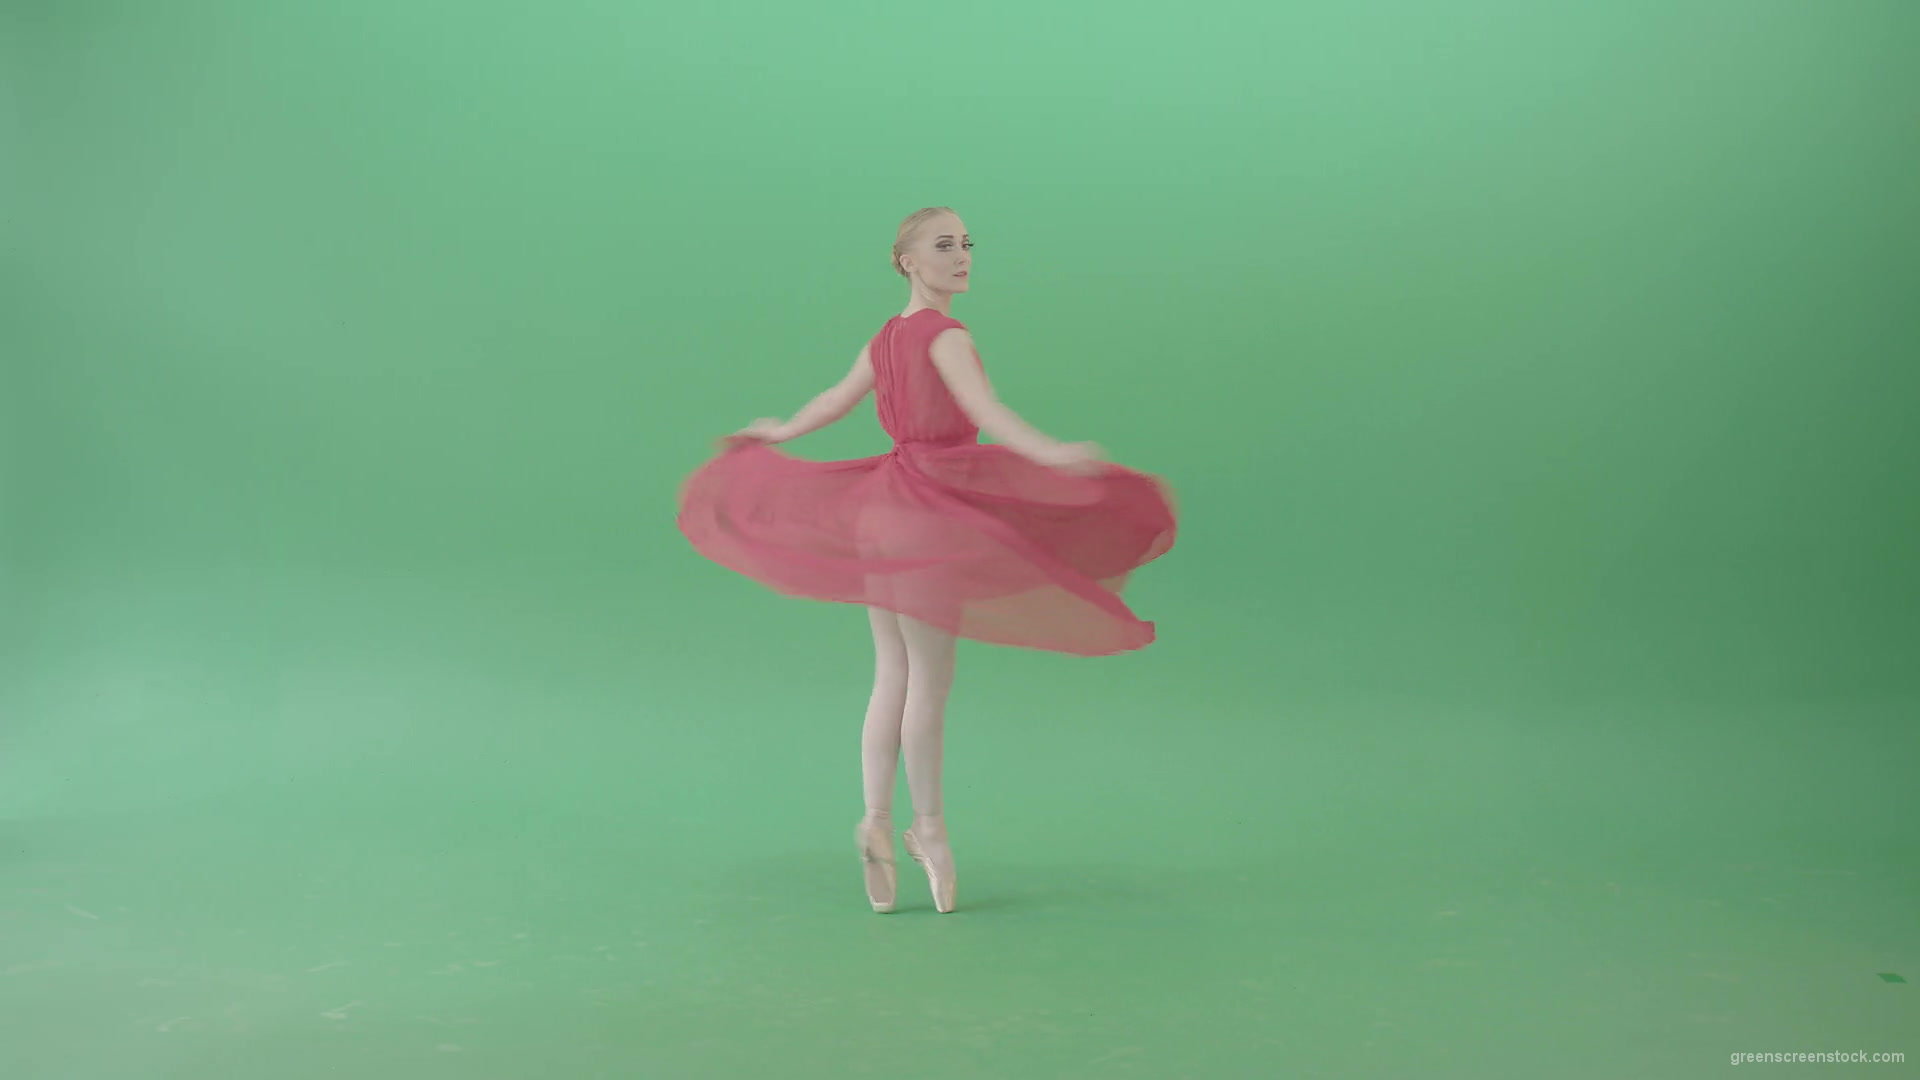 Light-Ballet-dancing-girl-in-red-wind-dress-spinning-on-green-screen-4K-Video-Footage-1920_004 Green Screen Stock